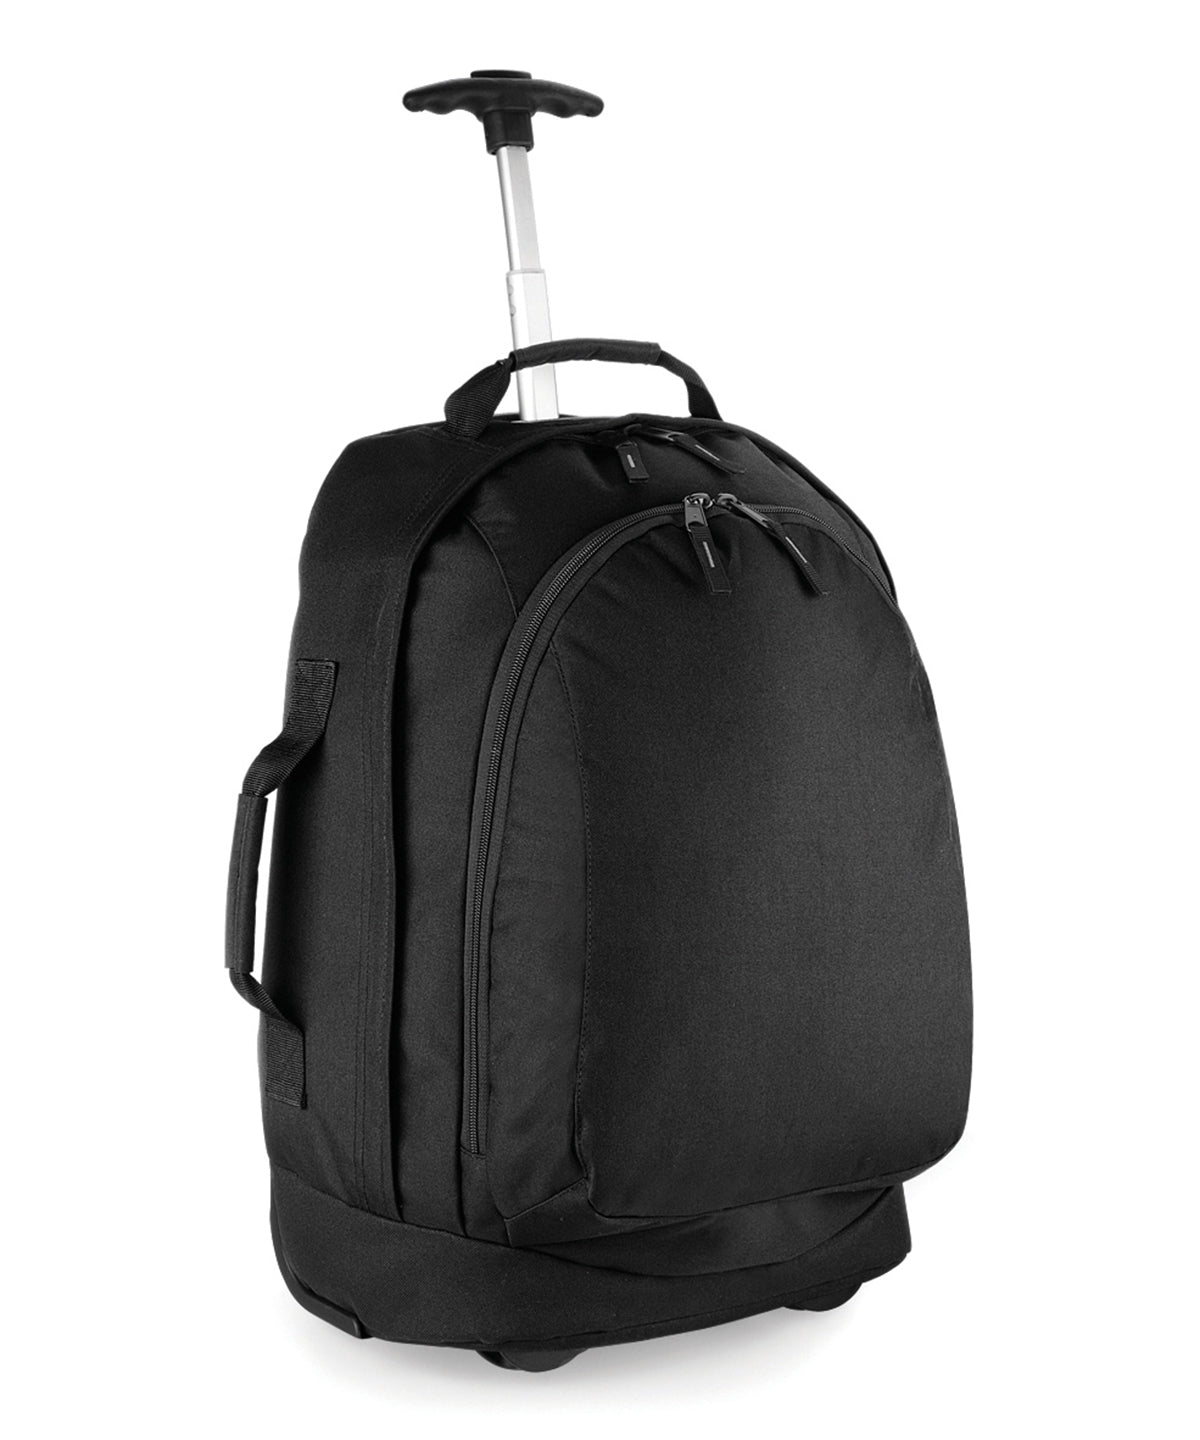 Personalised Bags - Black Bagbase Classic airporter